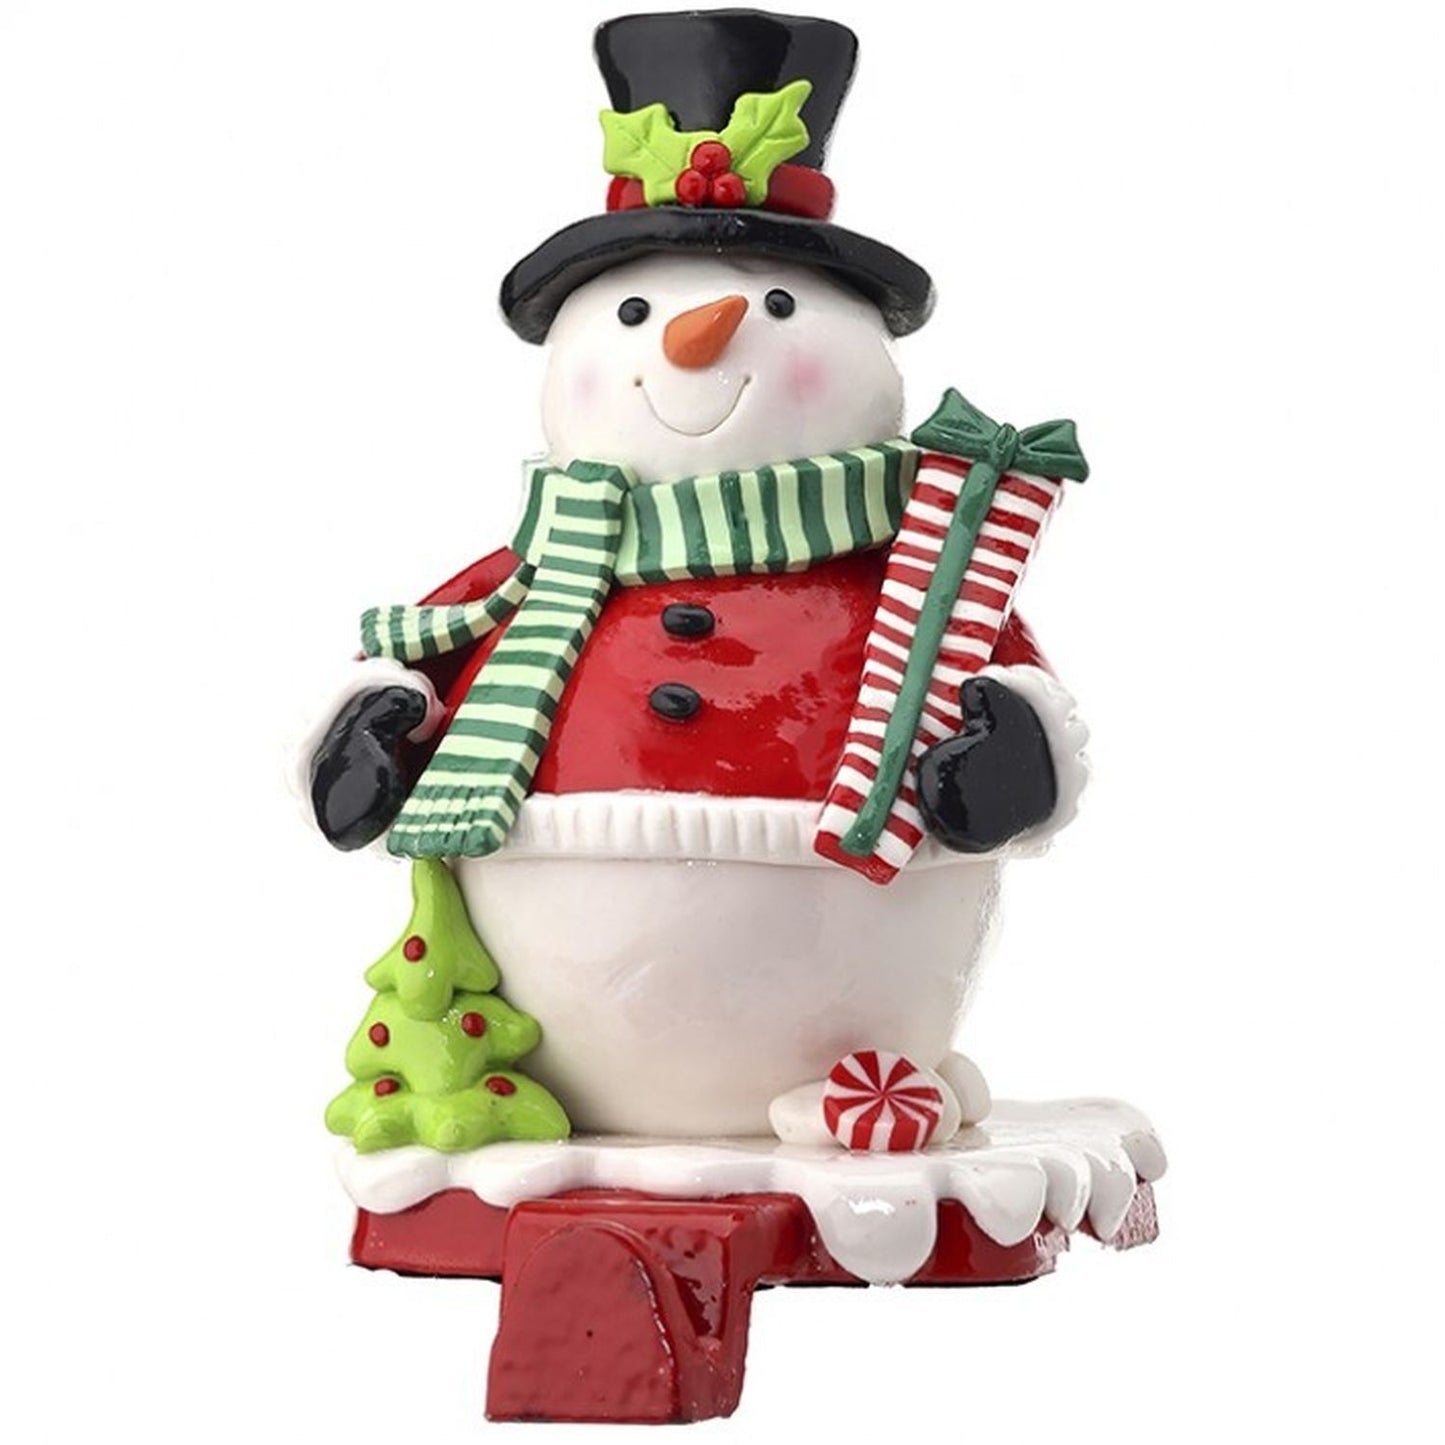 Regency International 6.5" Clay dough Snowman Stocking Holder